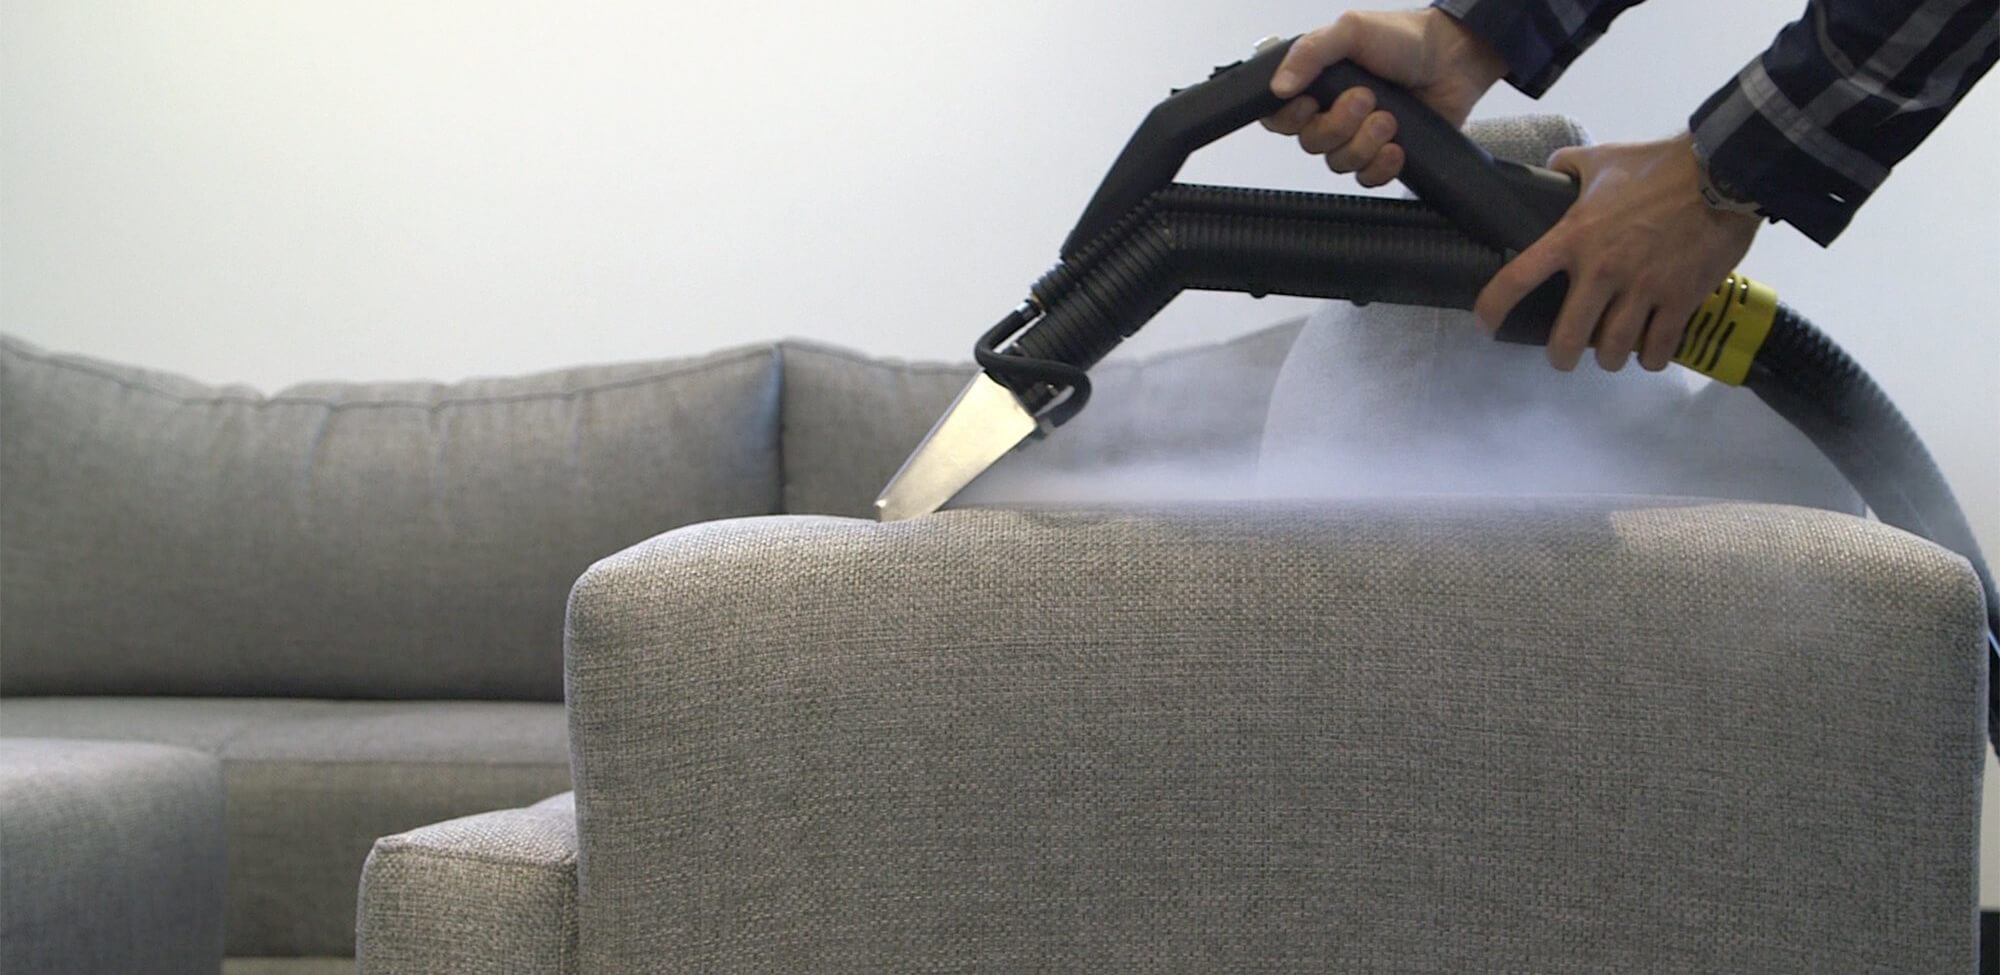 steamaid Sofa Cleaning